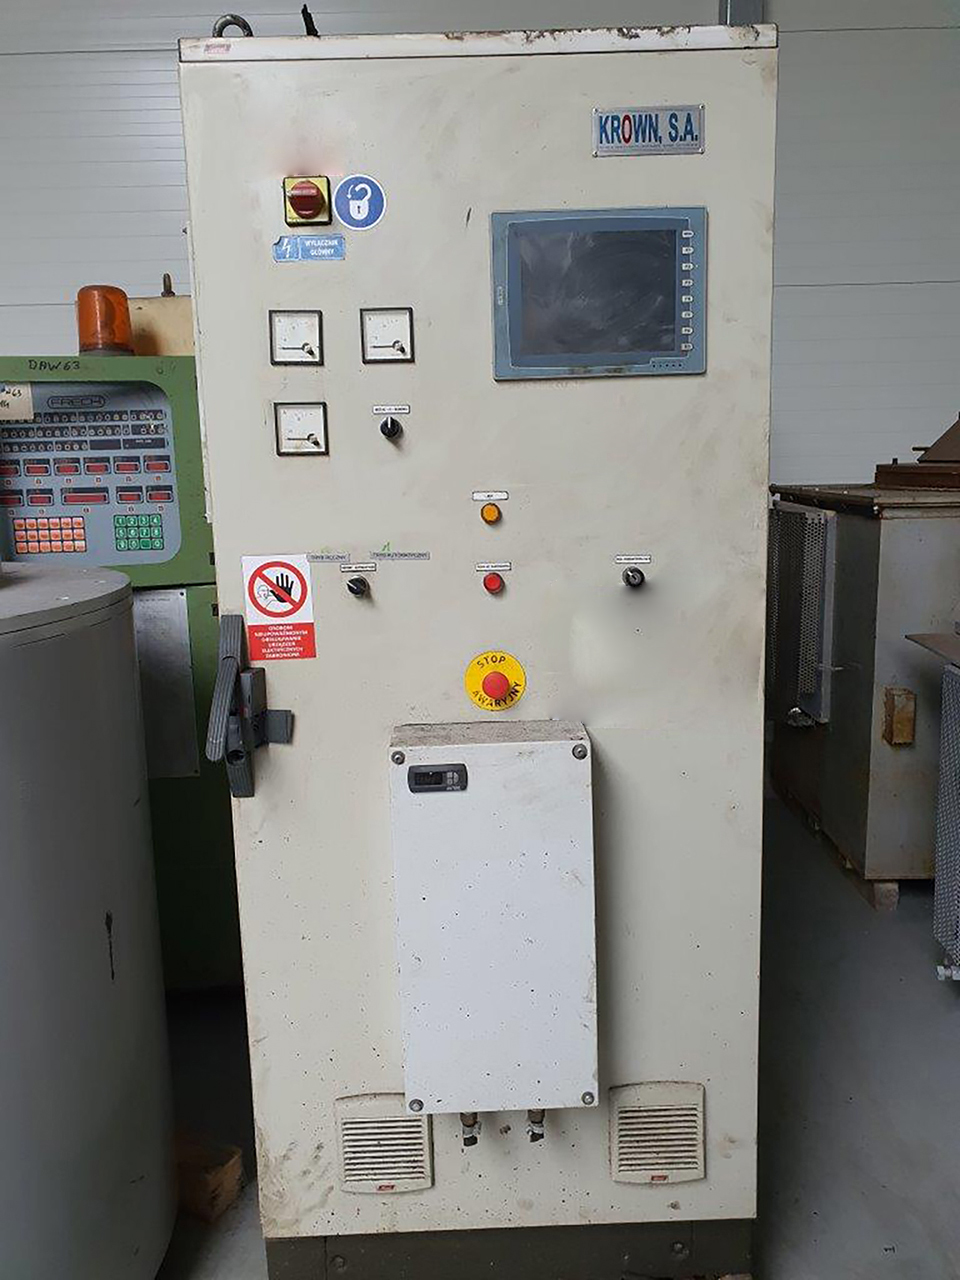 Krown Krownmatic KM 900 dosing furnace O1698, used